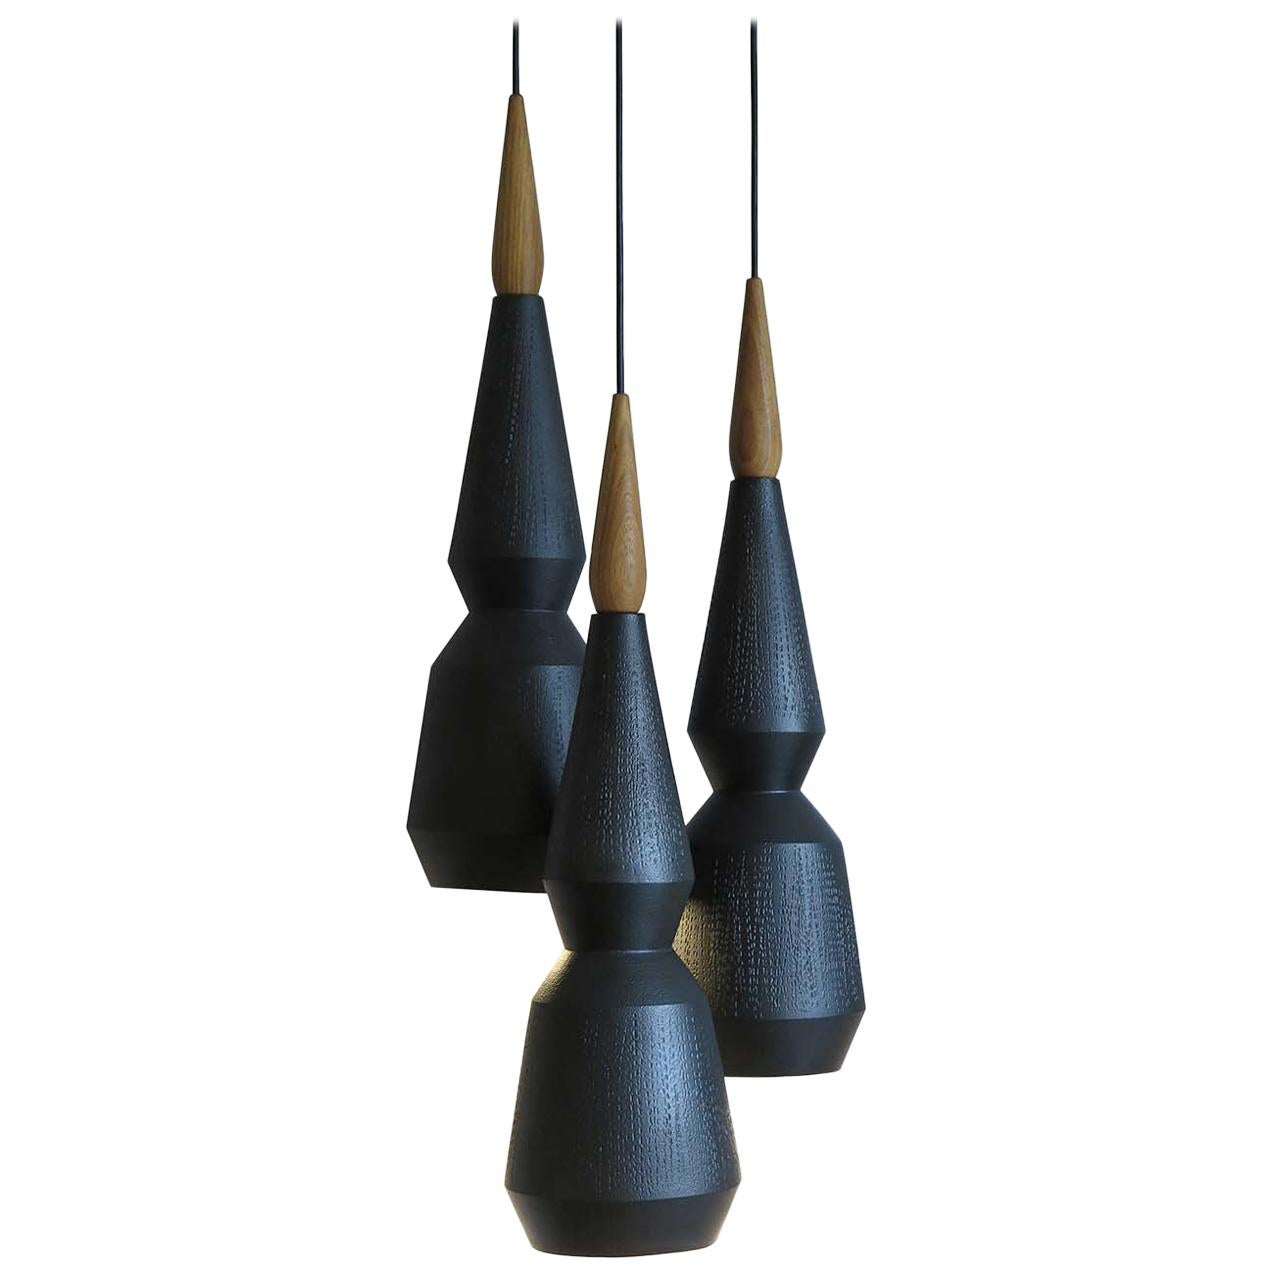 Set of 3 Pendant Lamps in Wood and Ceramics #3